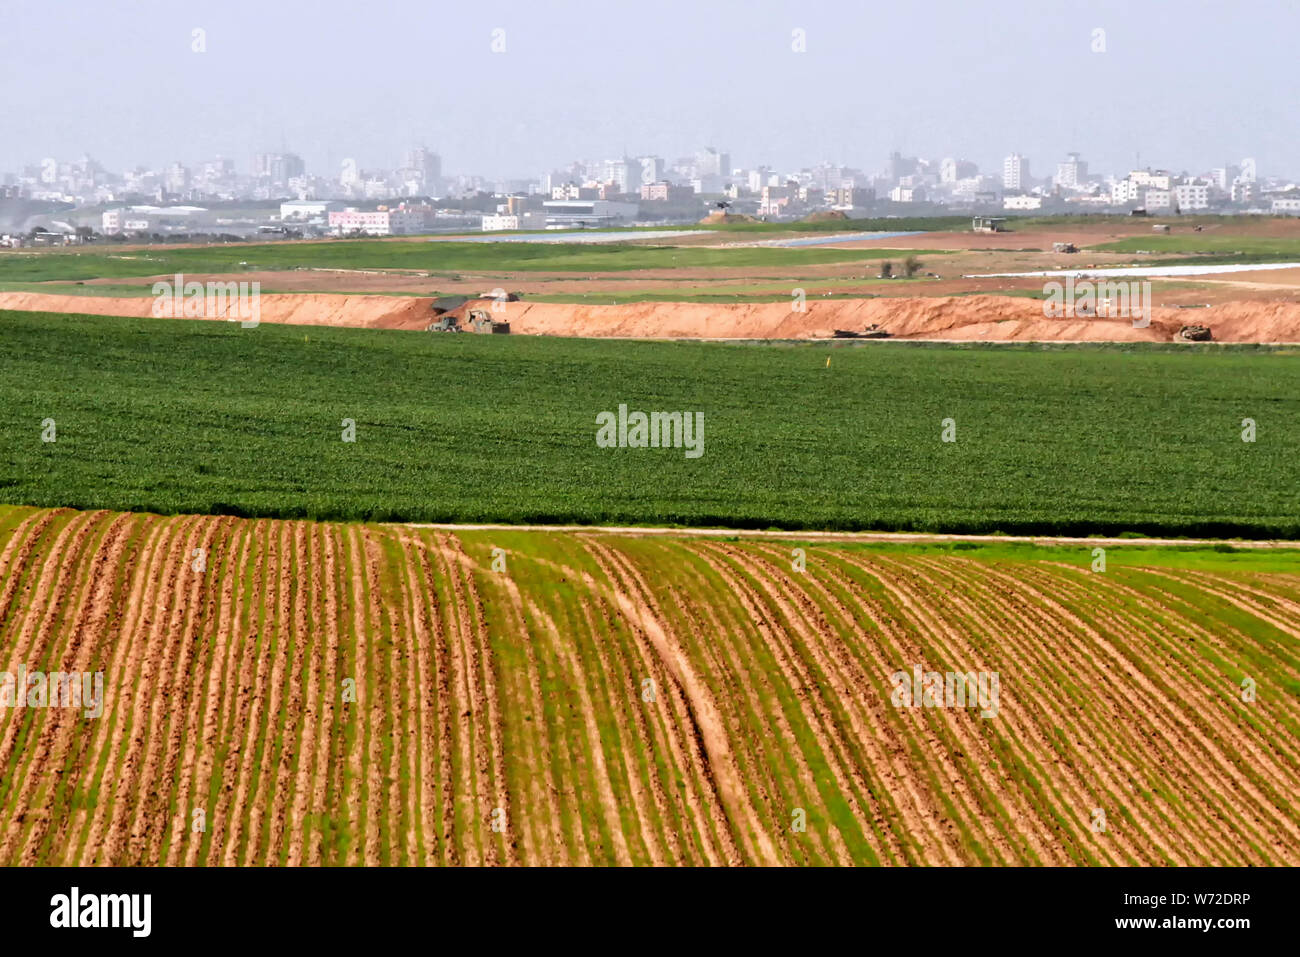 Israeli crop fields near kibbutz Mefalsim, backing up to the Gaza border, are green in Israel's mild winter. Stock Photo